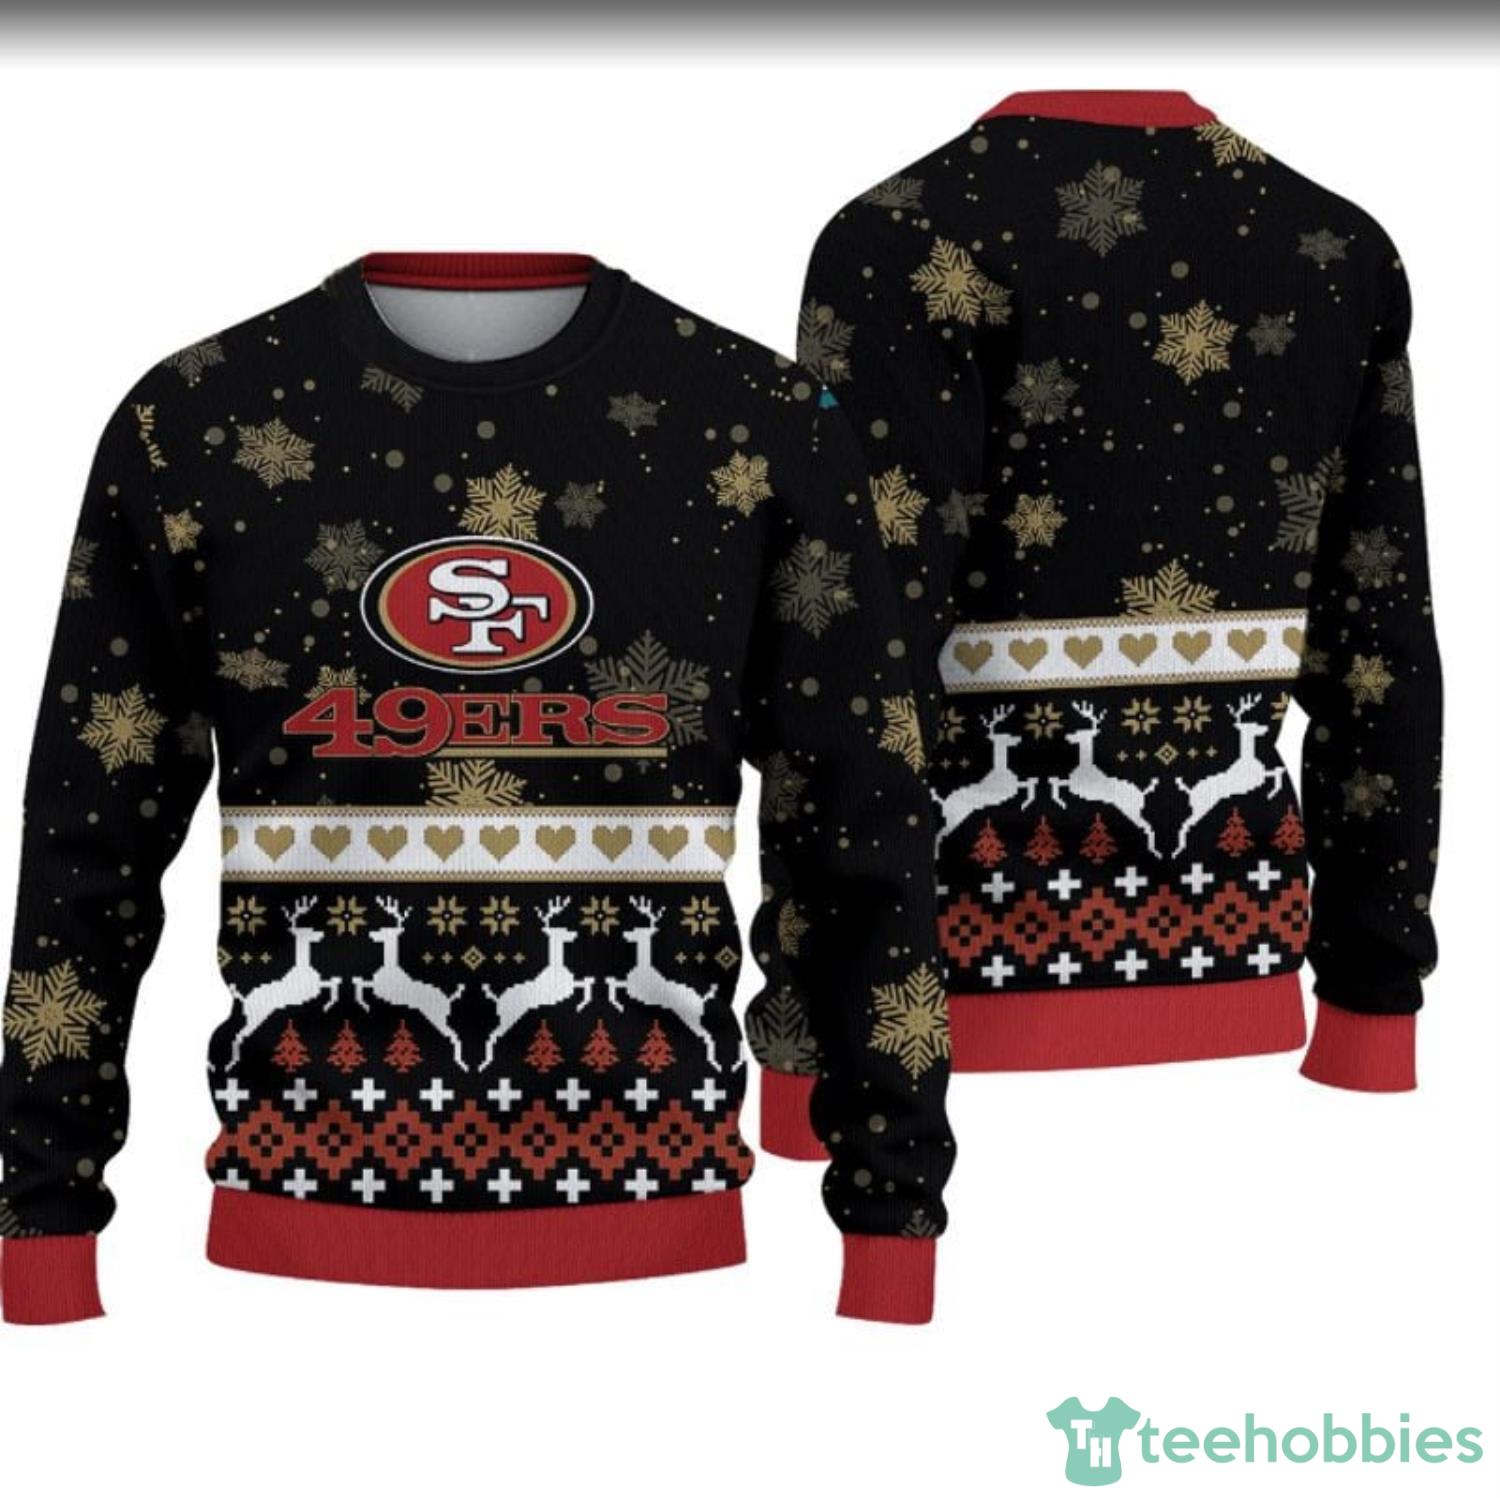 49ers light up sweater